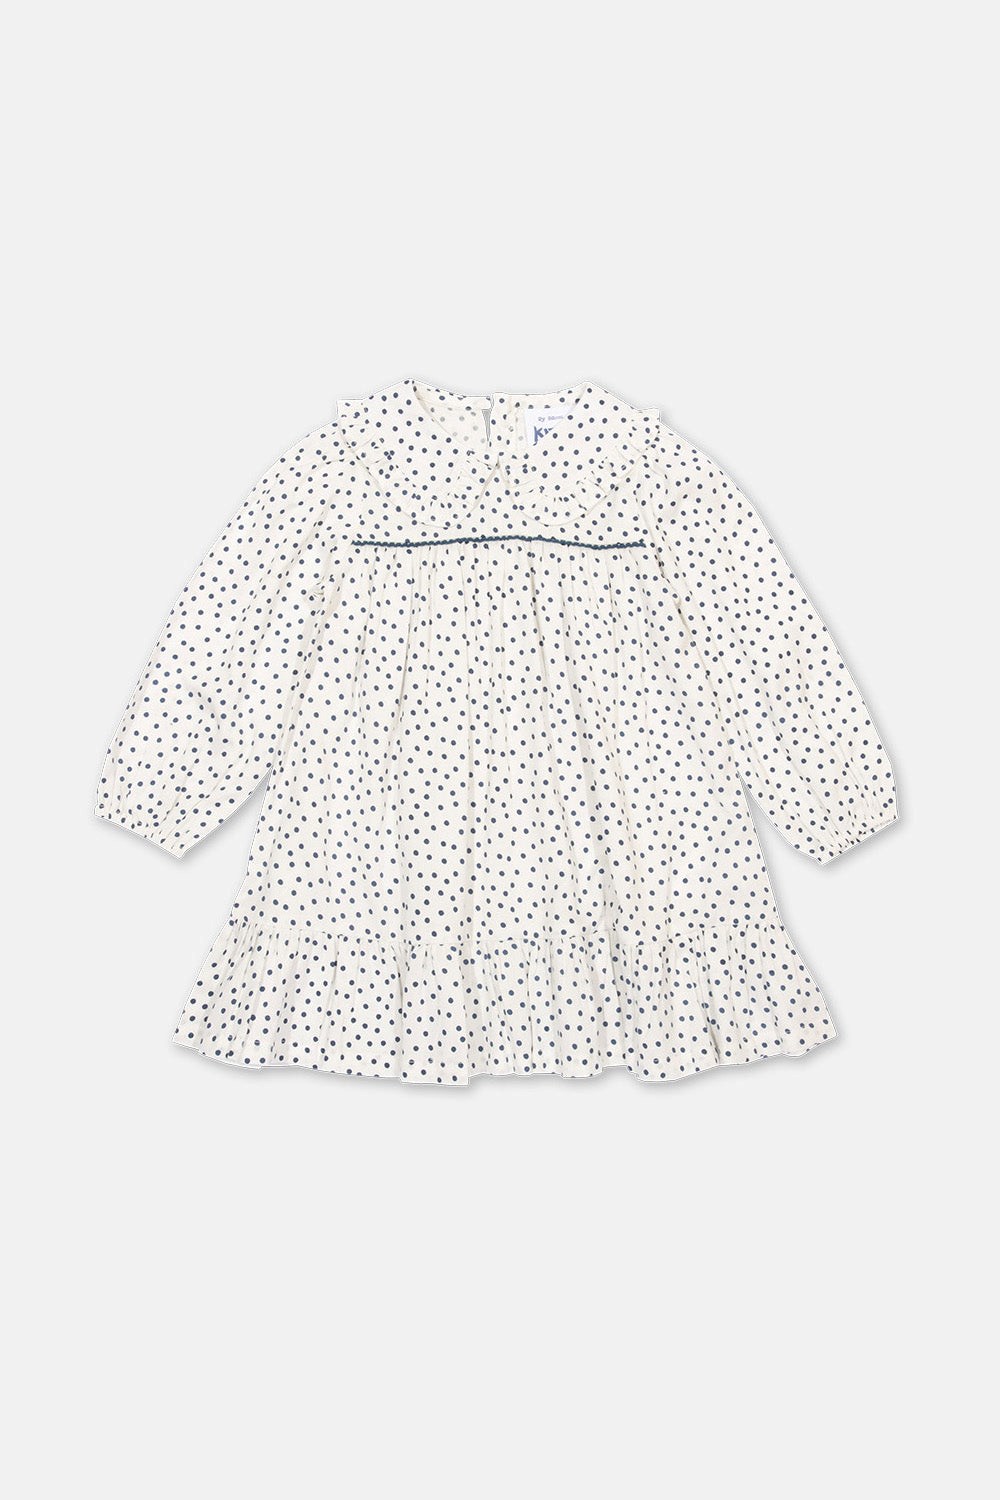 Dolly Collar Baby/Kids Organic Cotton Dress -